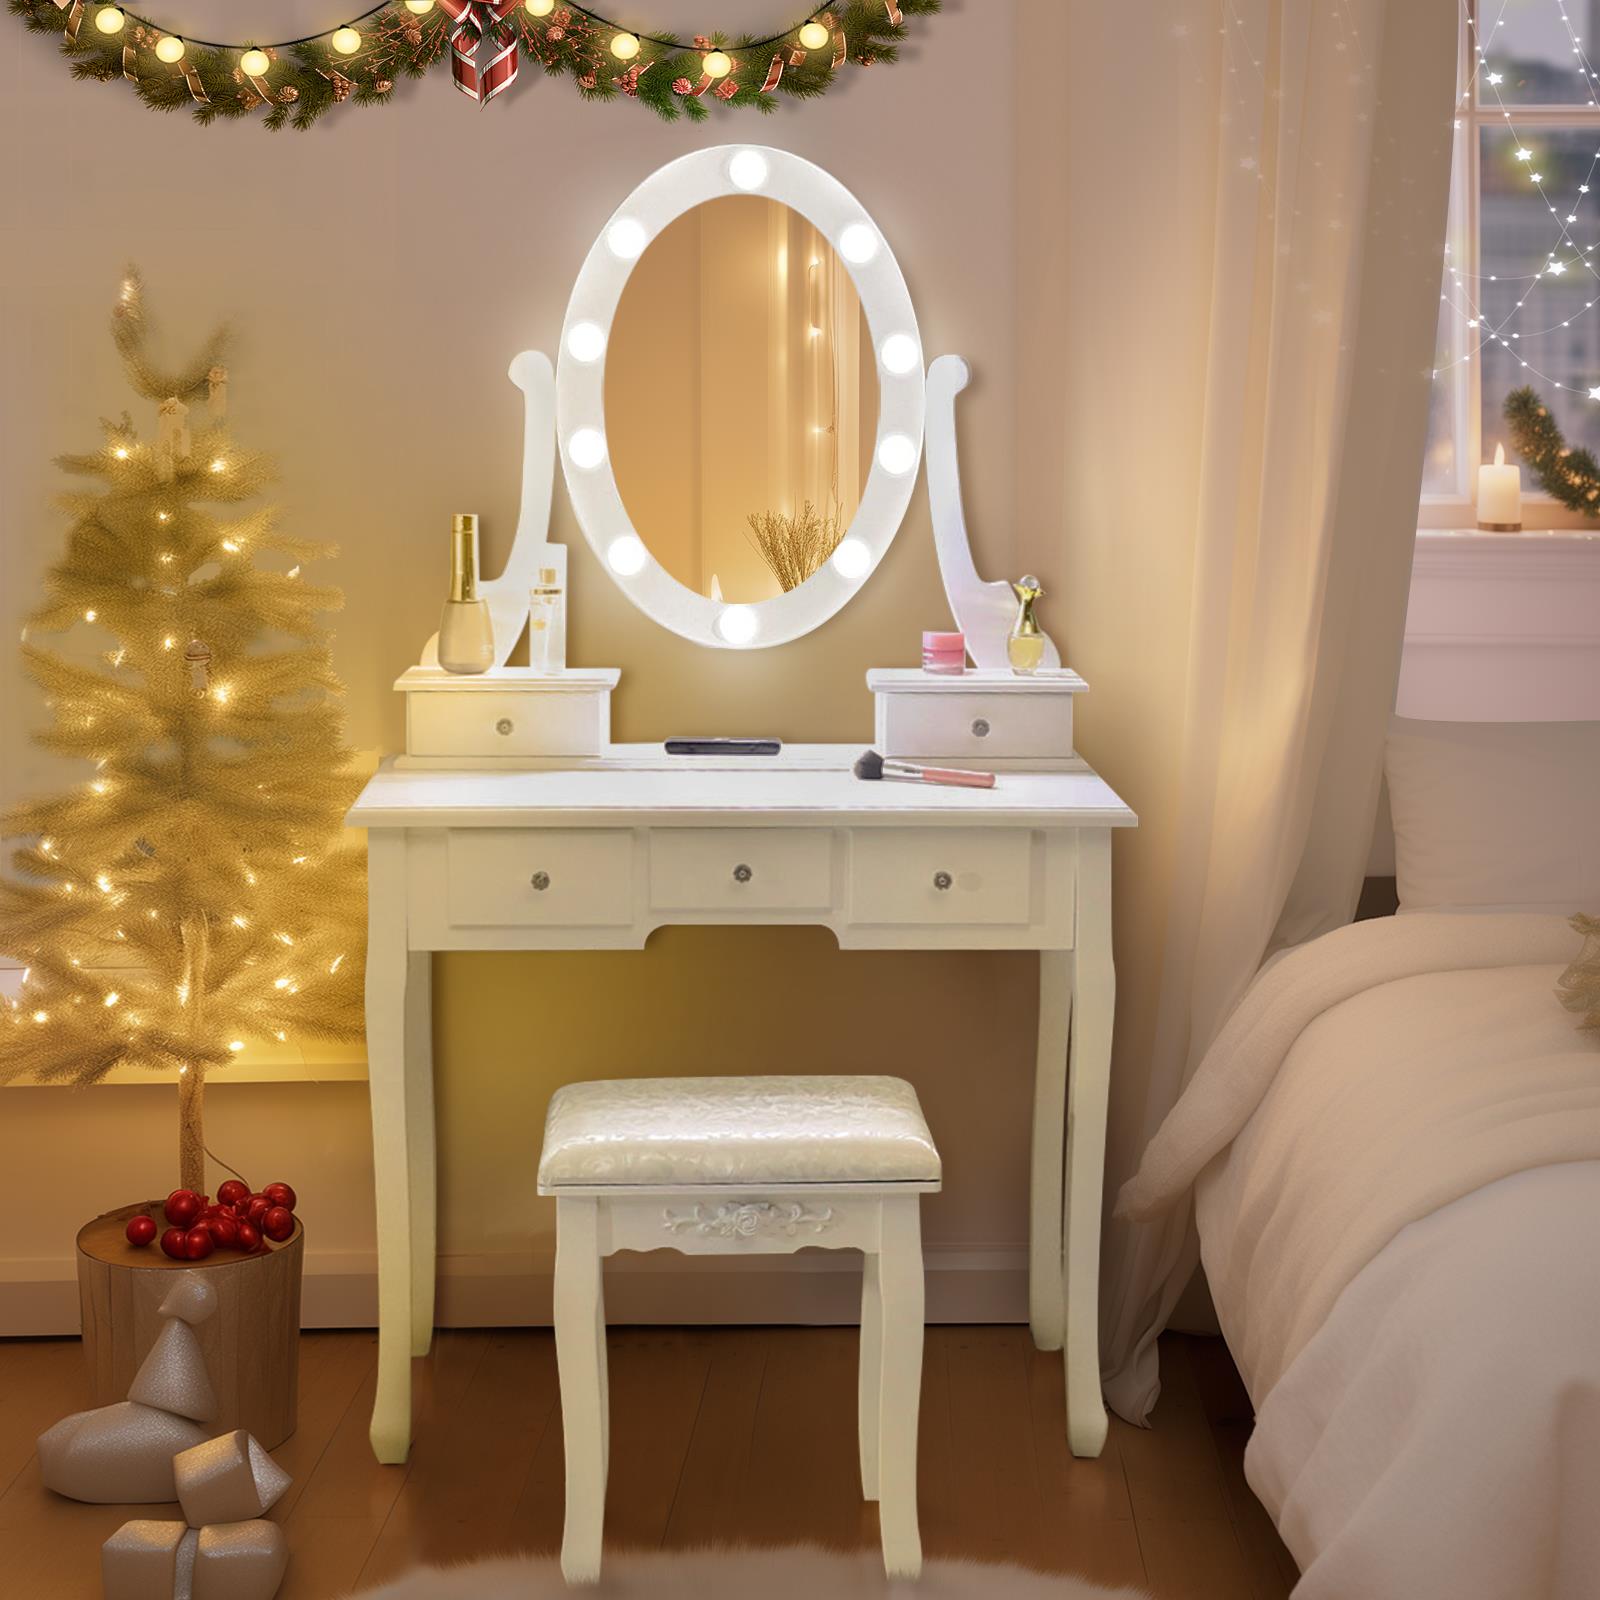 Ktaxon Vanity Table 10 LED Lights, 5 Drawers Makeup Dressing Desk with Cushioned Stool Set,Bedroom Vanities Set White - image 2 of 13